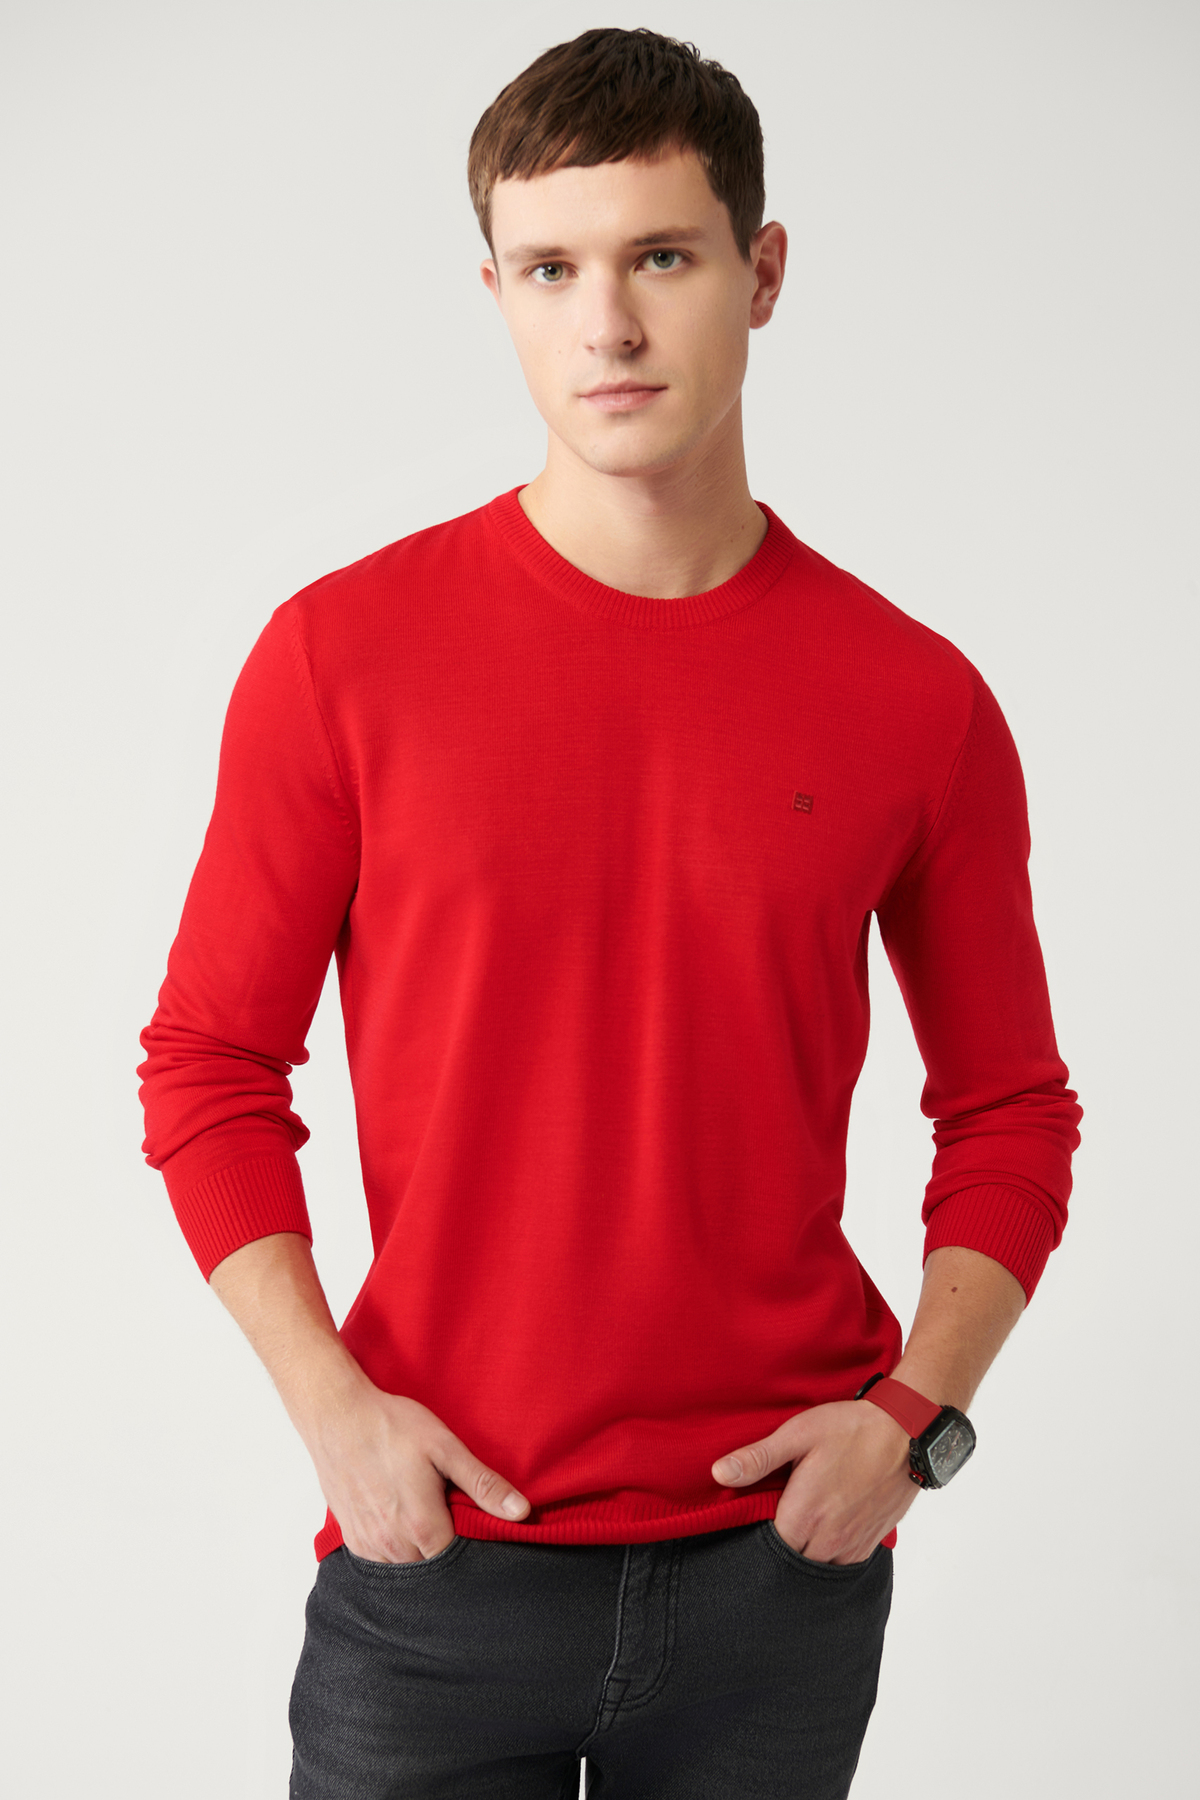 Avva Men's Red Knitwear Sweater Crew Neck Non-Pilling Regular Fit